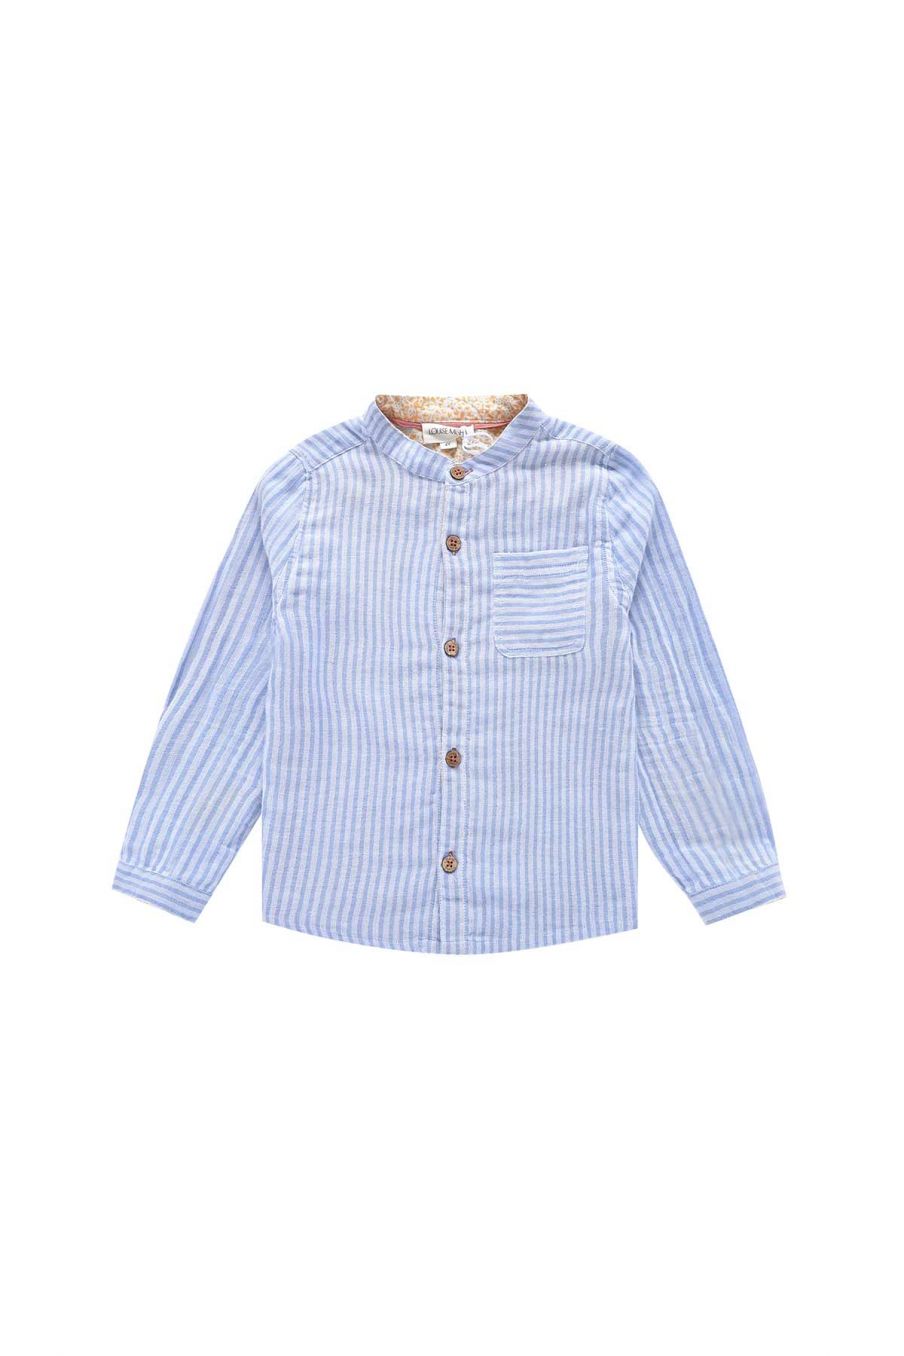 garccon-chemise-amod-blue-stripes